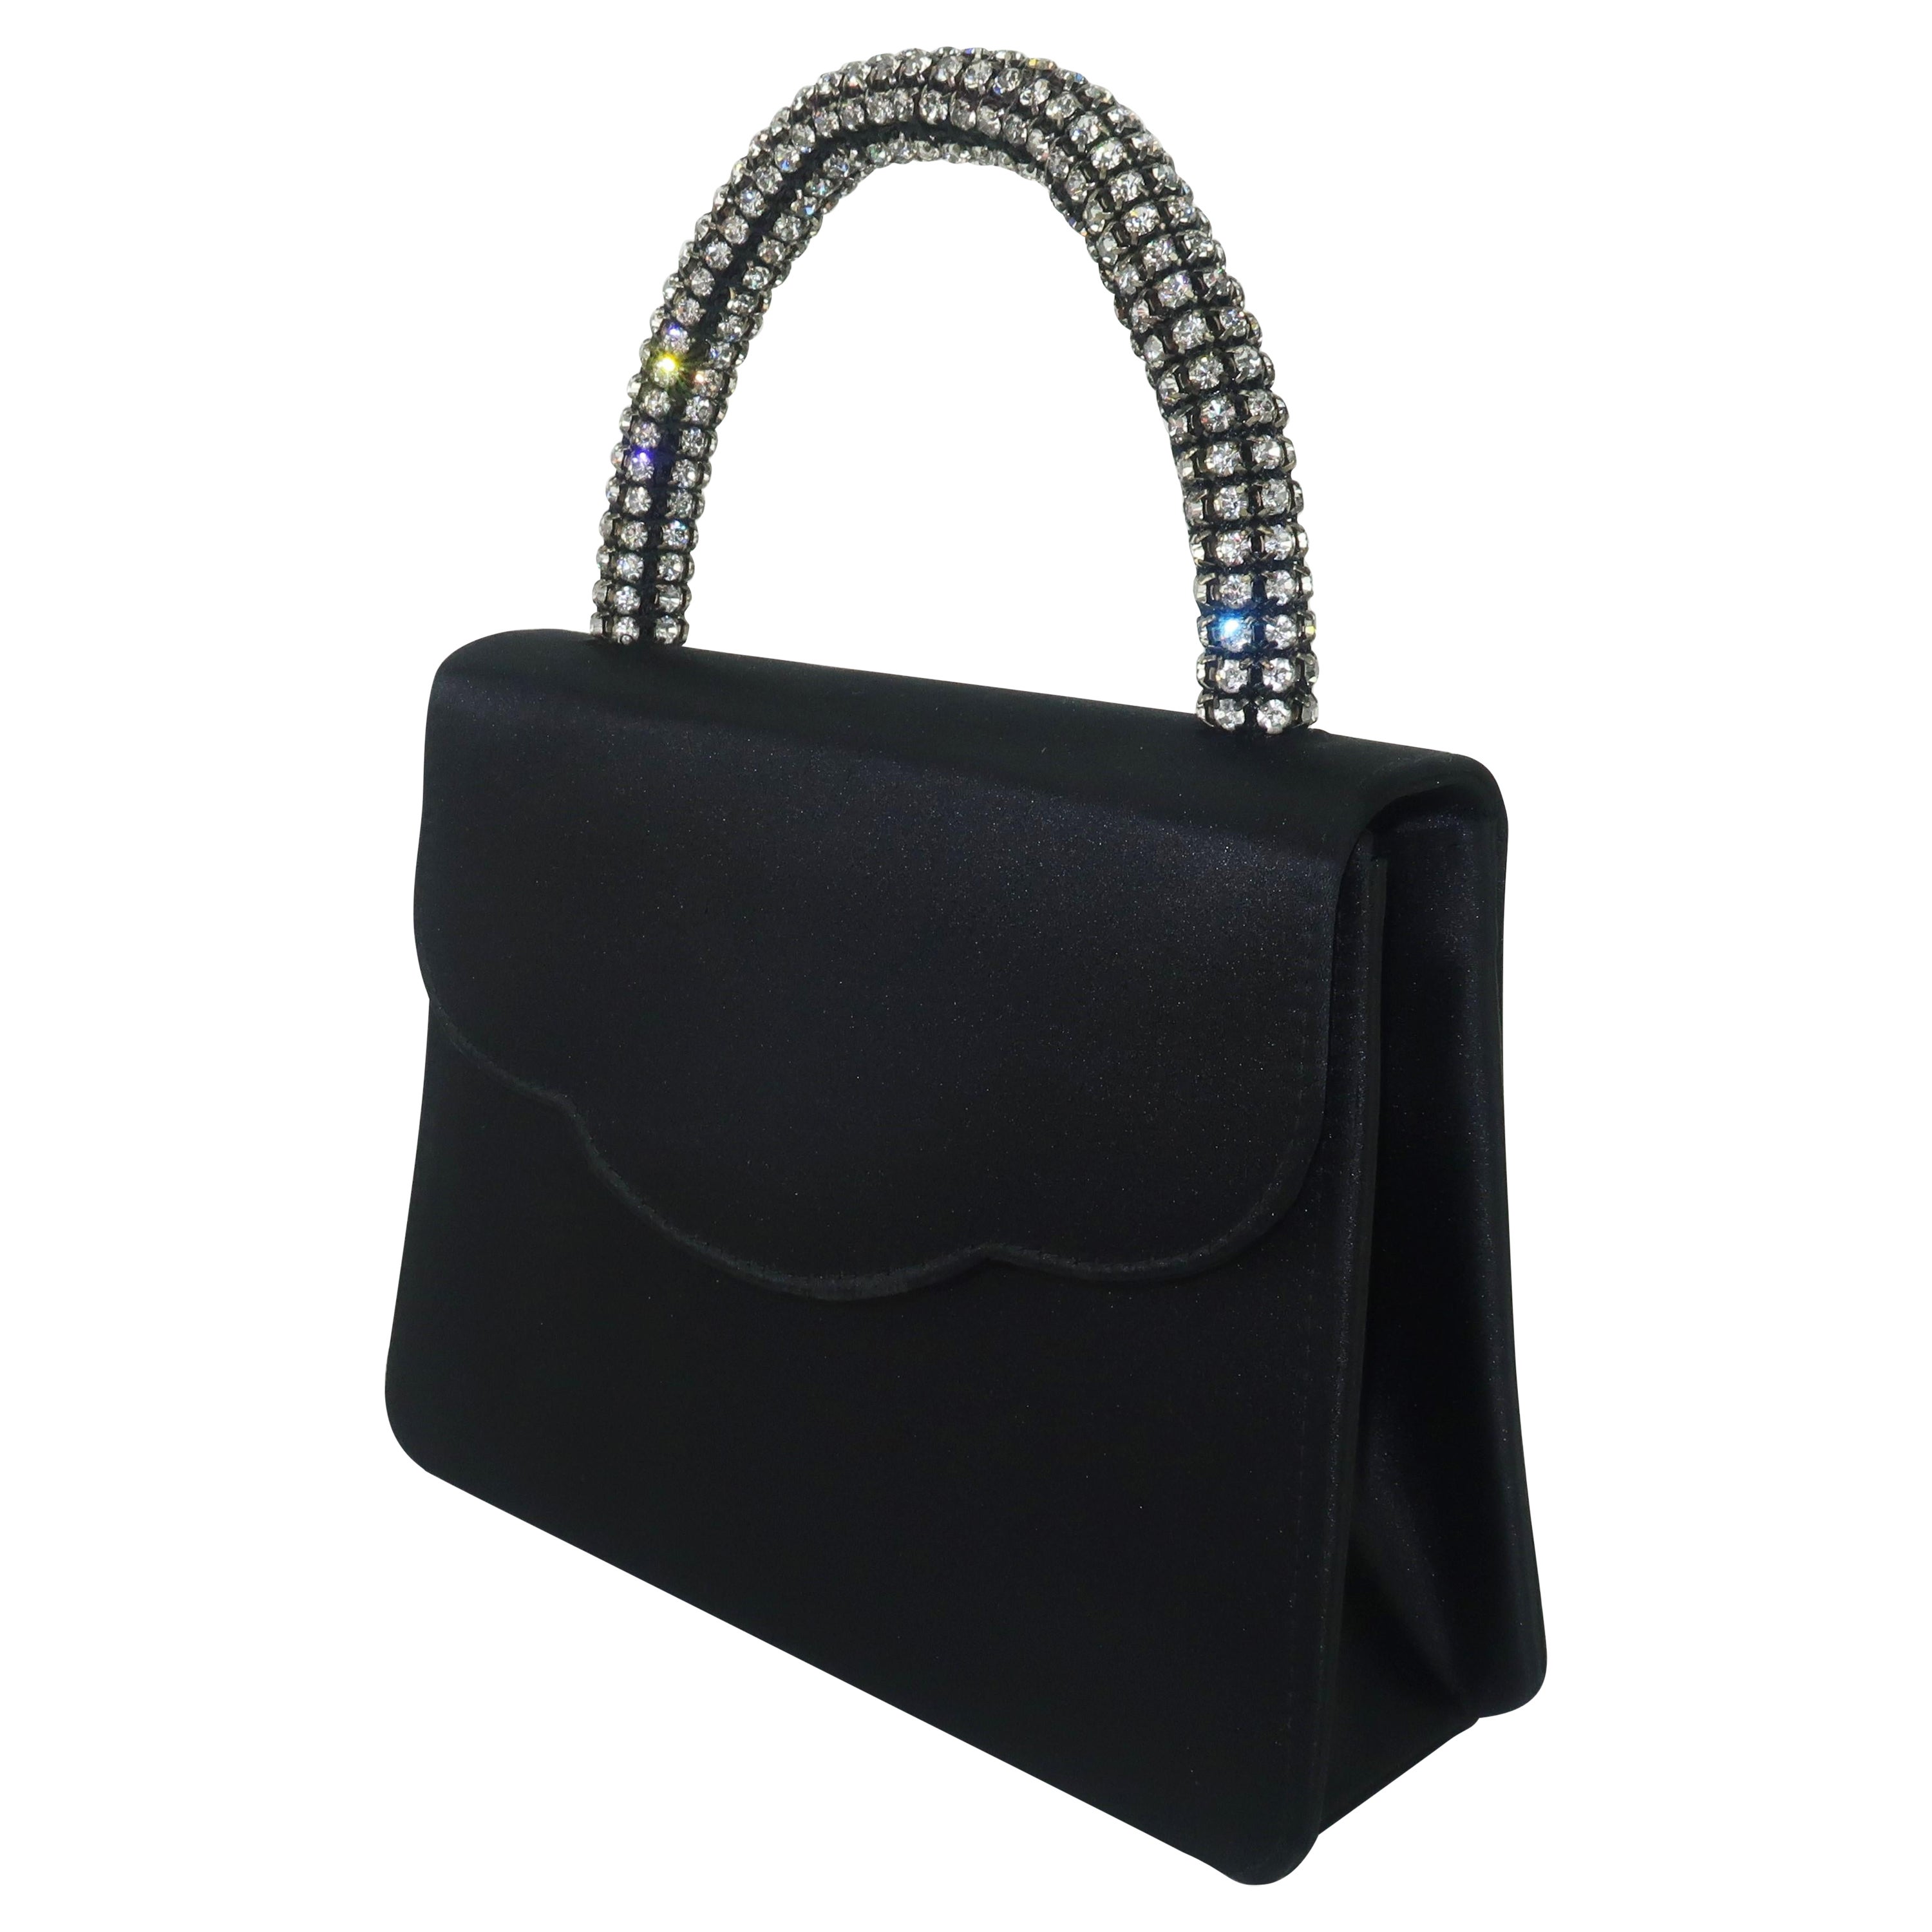 Neiman Marcus Black Satin Evening Handbag With Rhinestone Handle